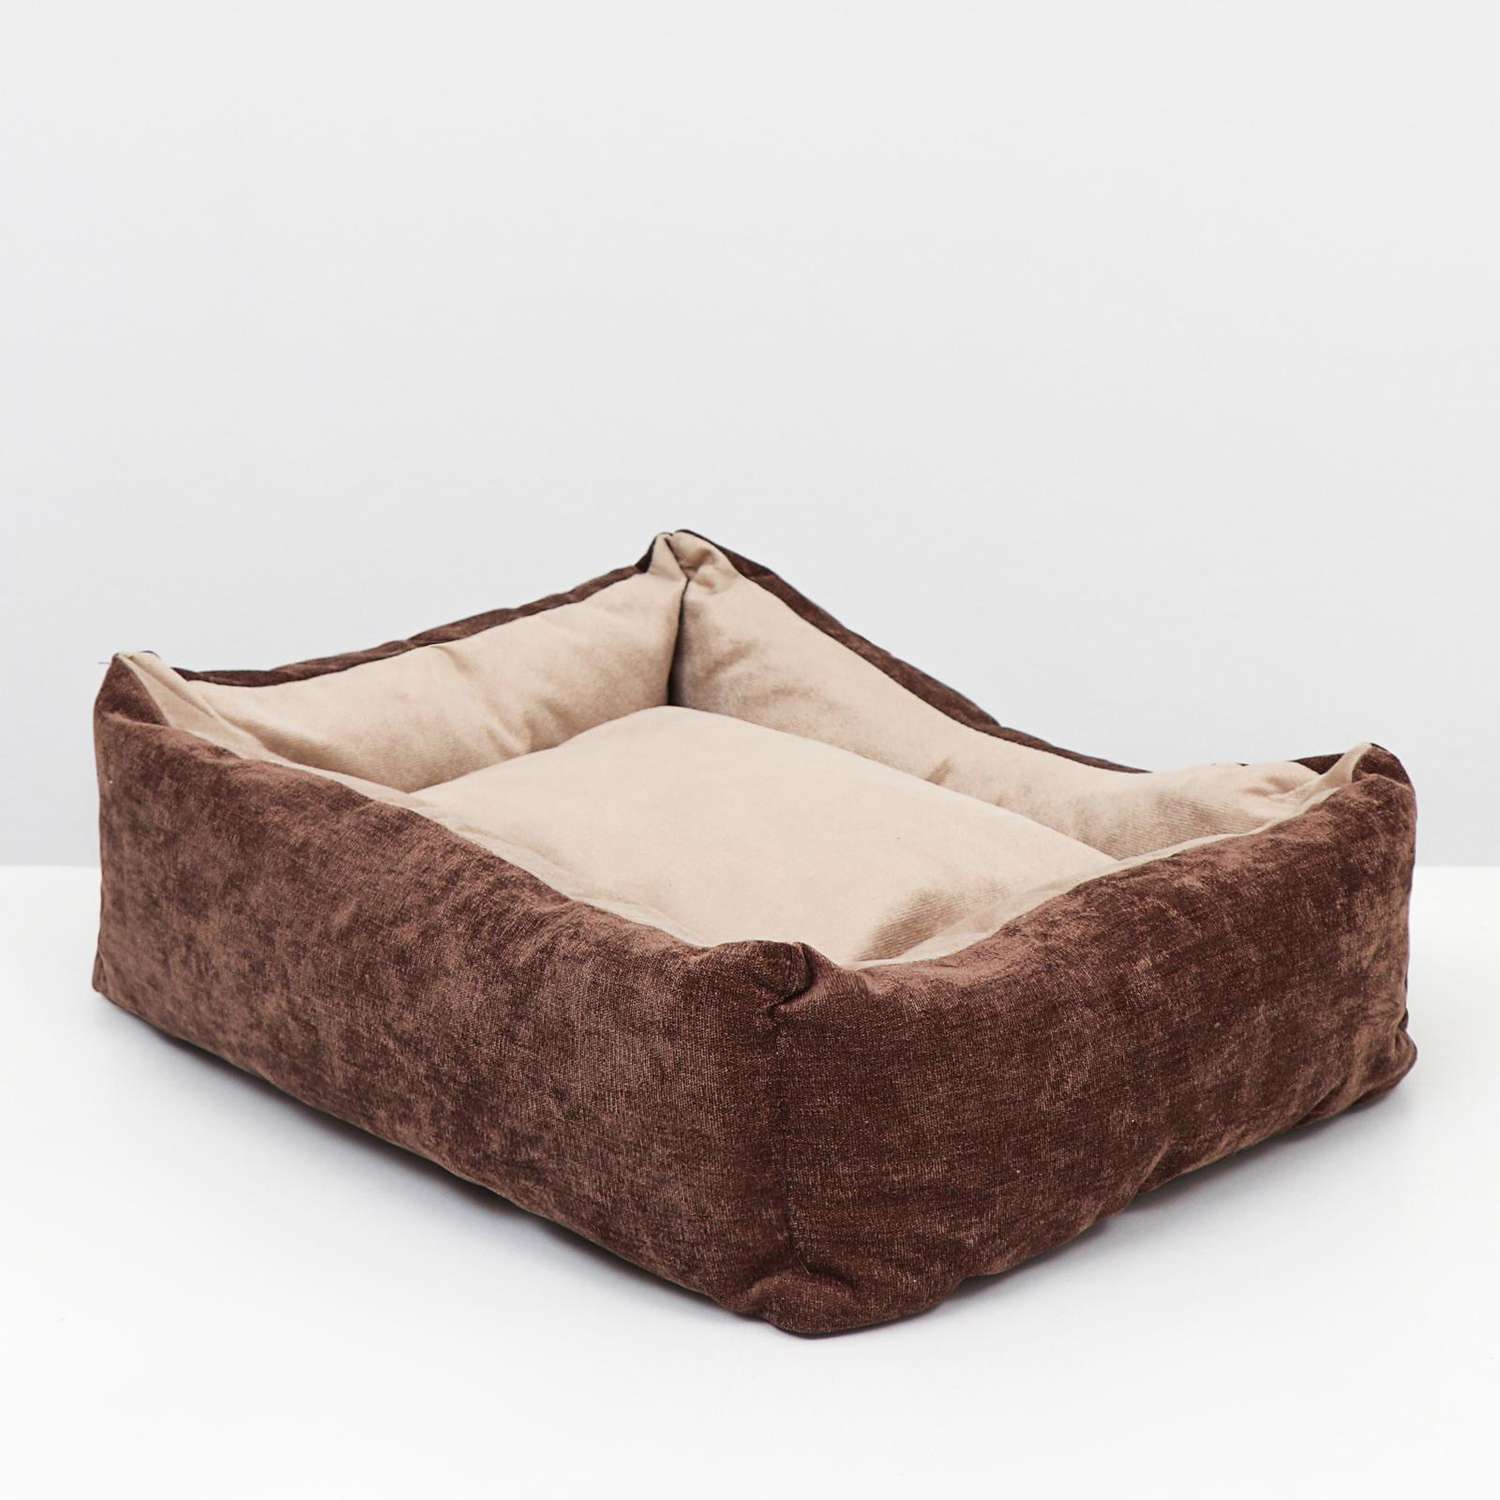 Лежанка Пижон со съемным чехлом мебельная ткань поролон 45х35х13 см - фото 2